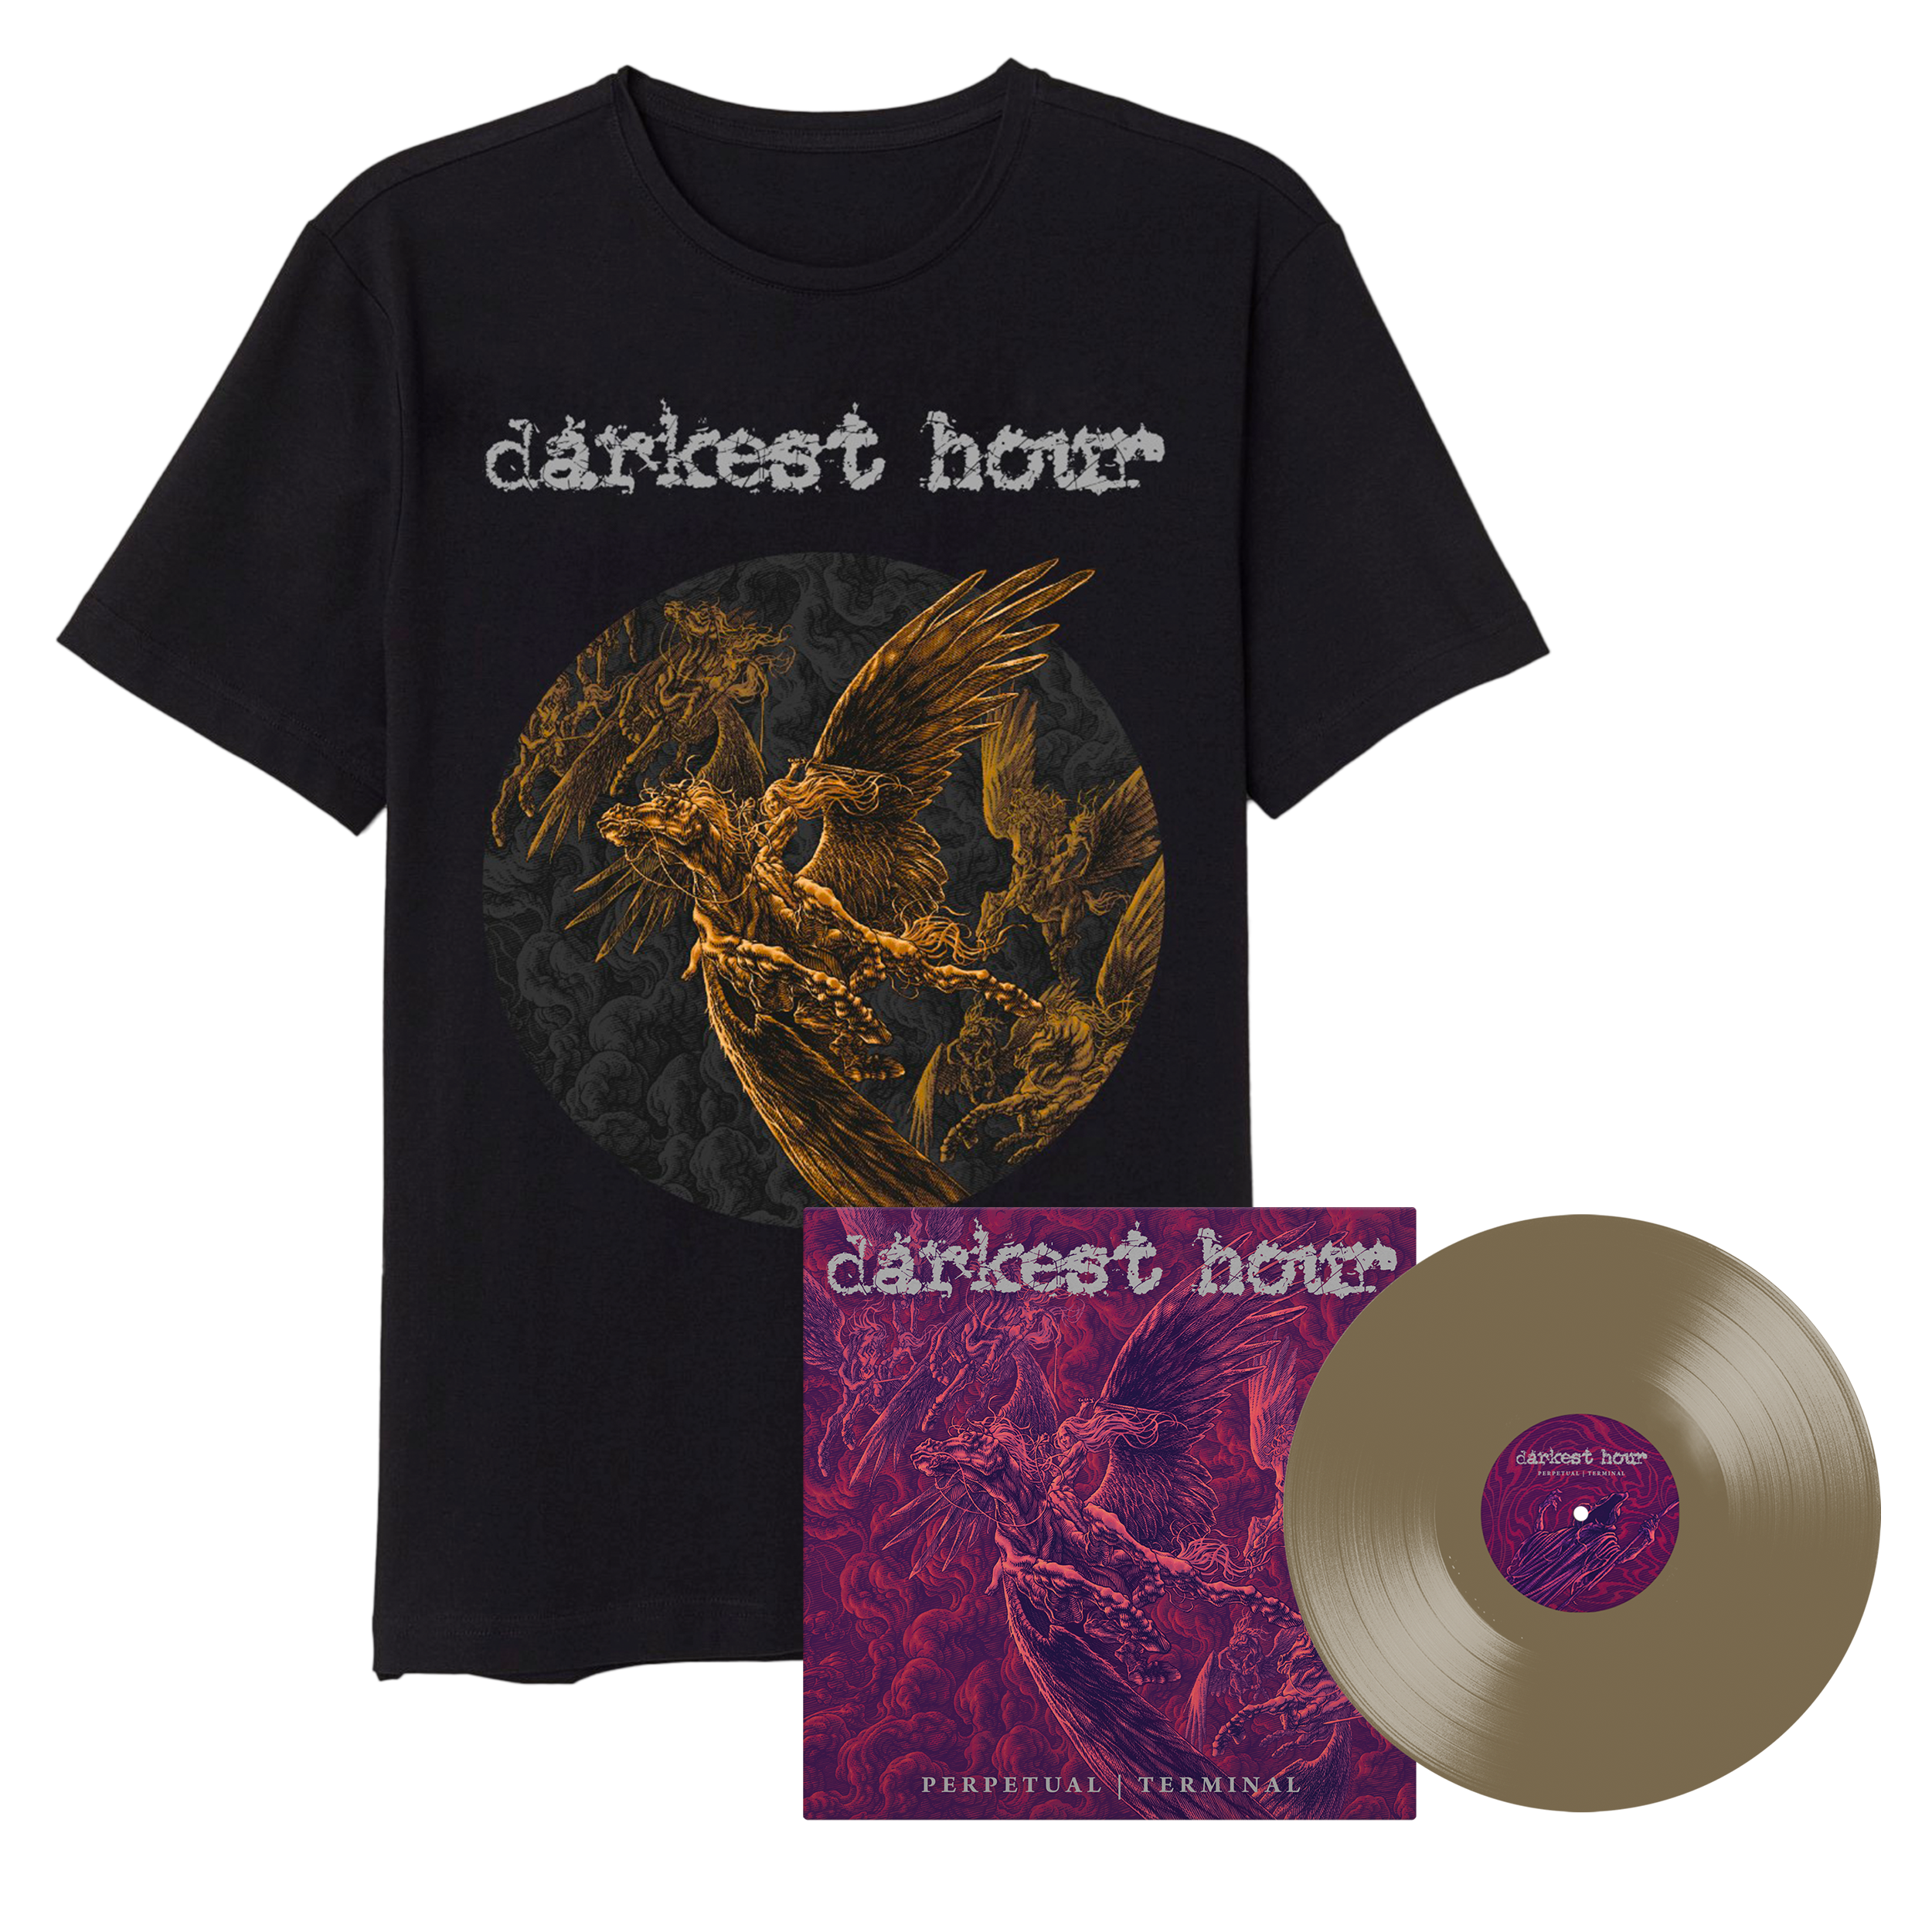 Darkest Hour - Dragon Shirt + Perpetual Terminal Vinyl (Gold Nugget) Bundle